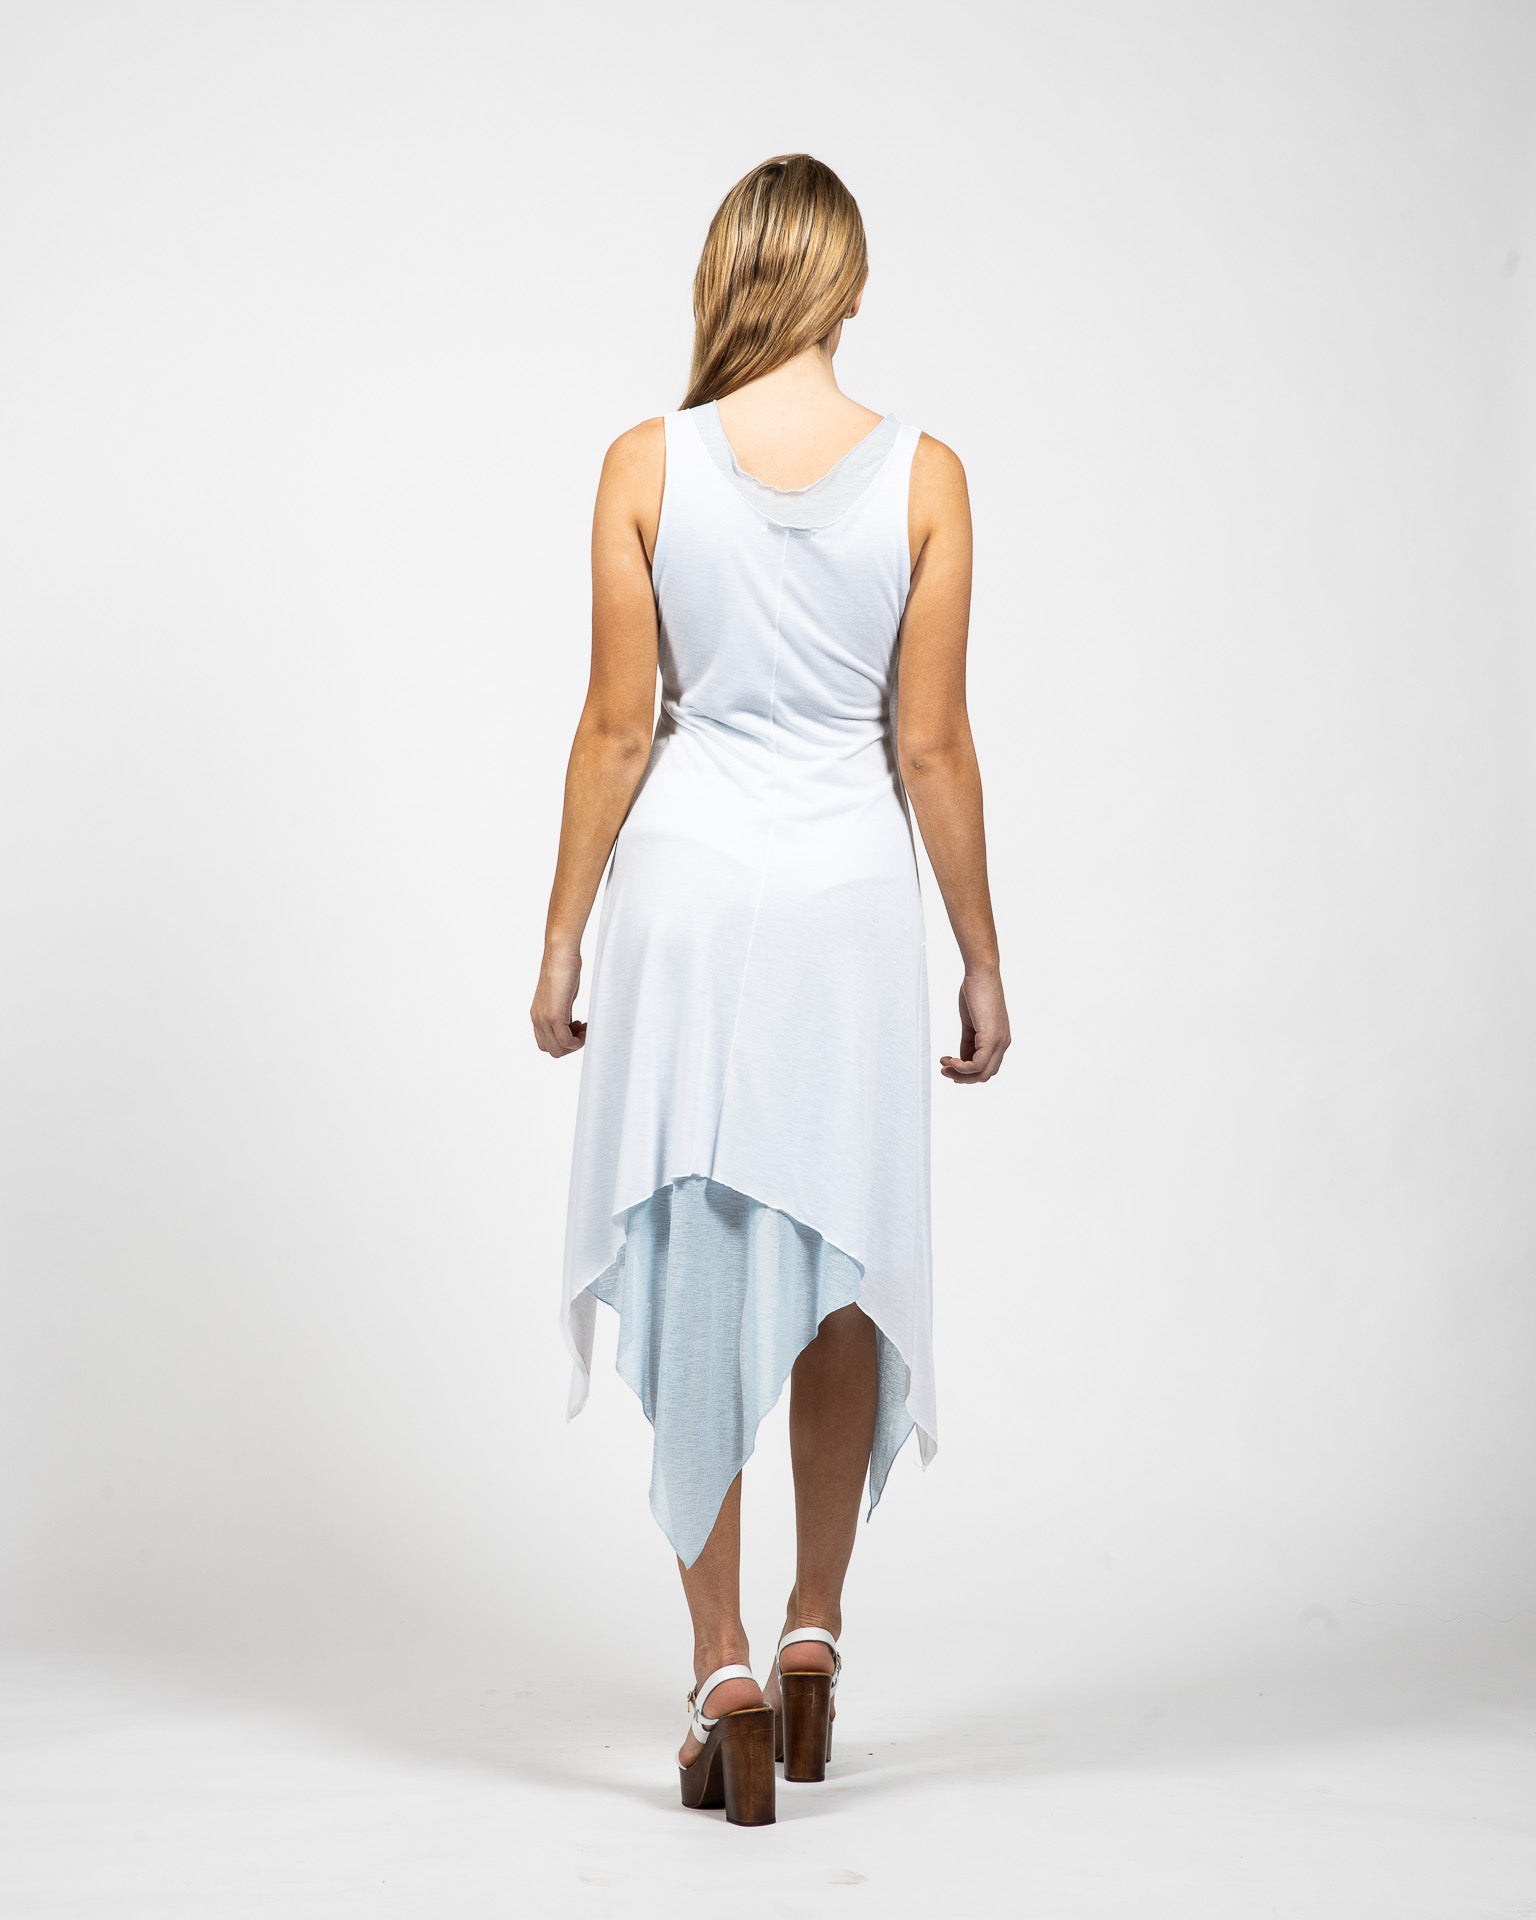 Multi Layered V – Neck Dress - Back View - Samuel Vartan